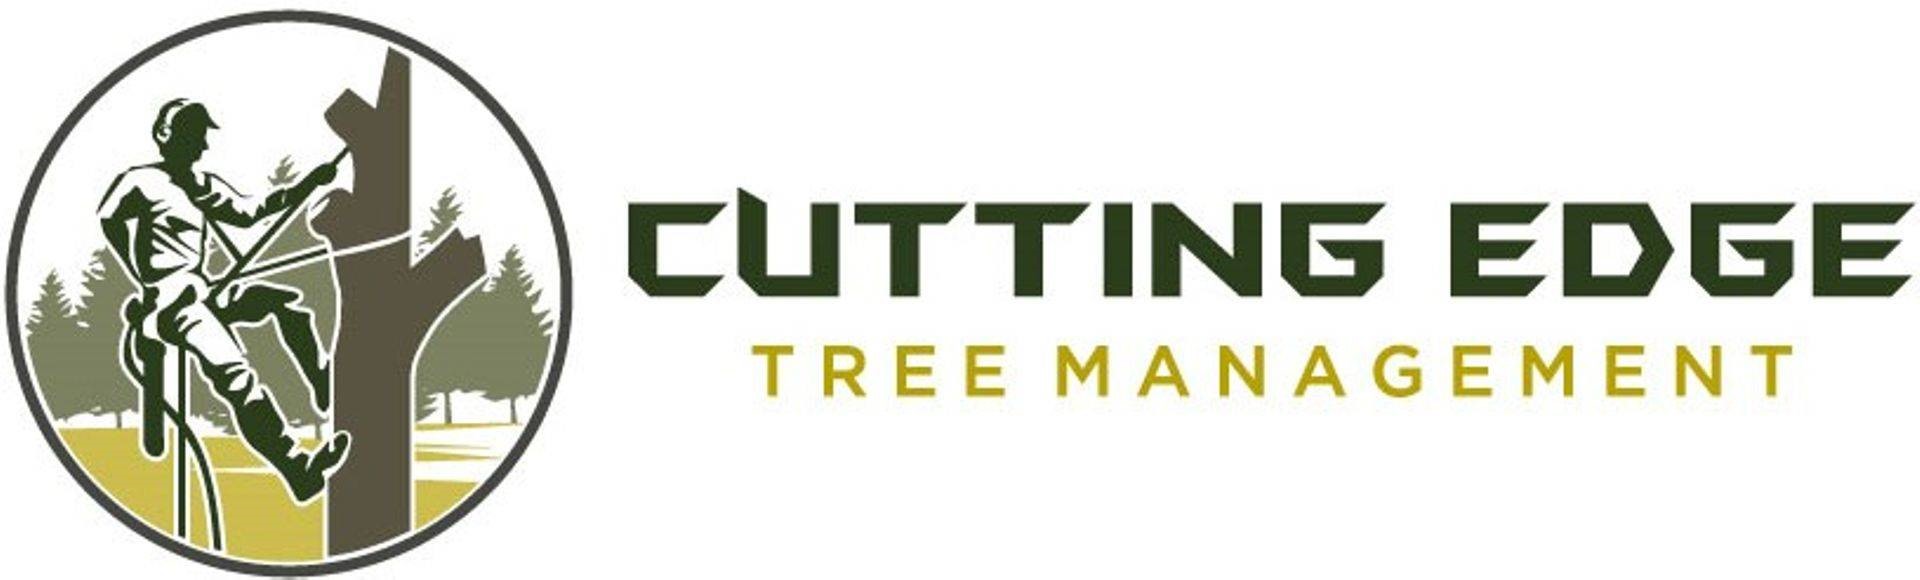 Cutting Edge Tree Management logo